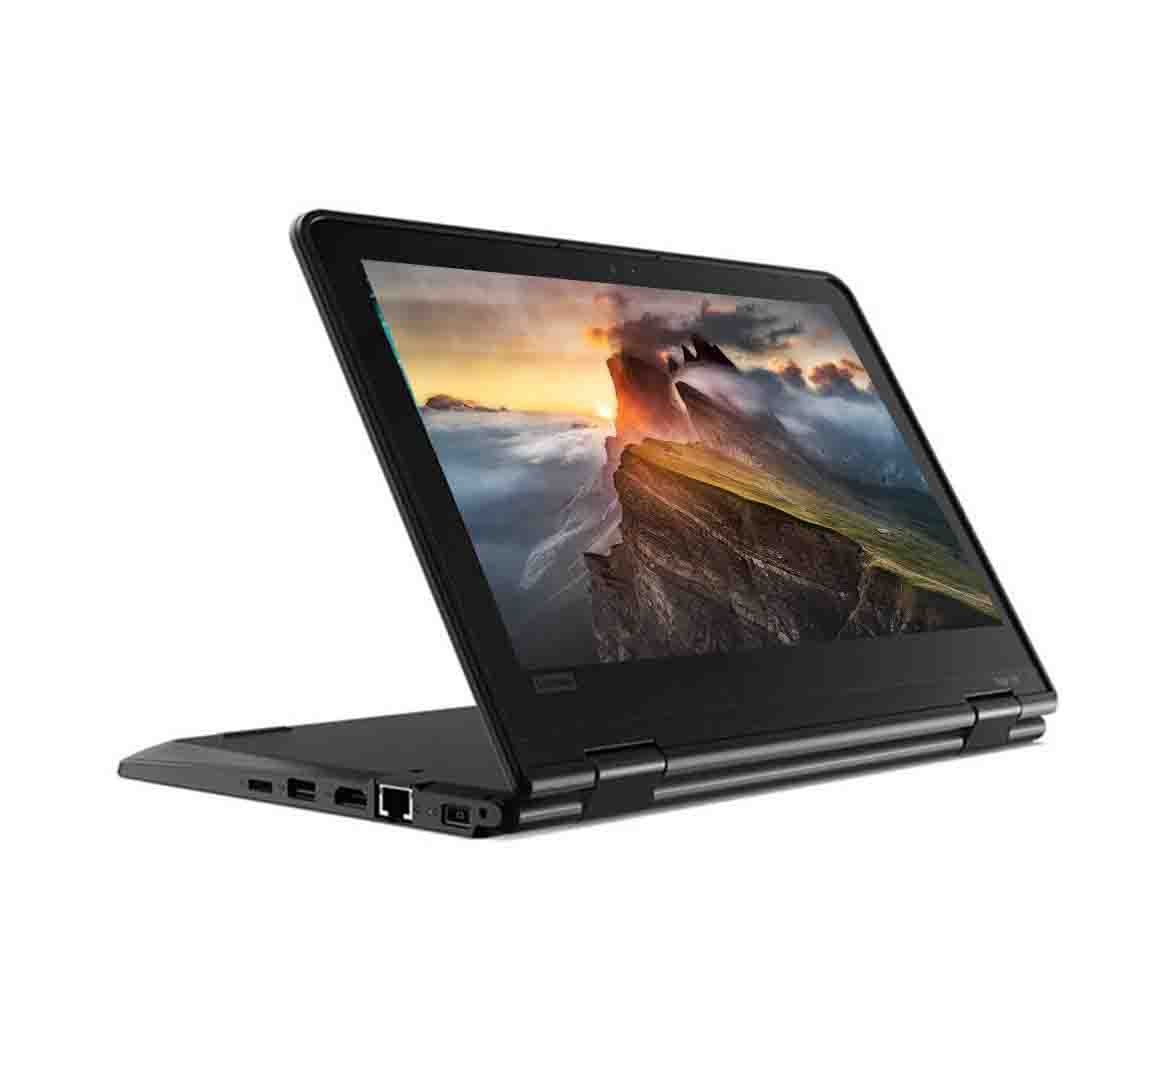 Lenovo ThinkPad 11e Yoga Business Laptop, Intel Celeron CPU, 4GB RAM, 128GB SSD, 11.6 inch Touchscreen 360°, Windows 10 Pro, Refurbished Laptop